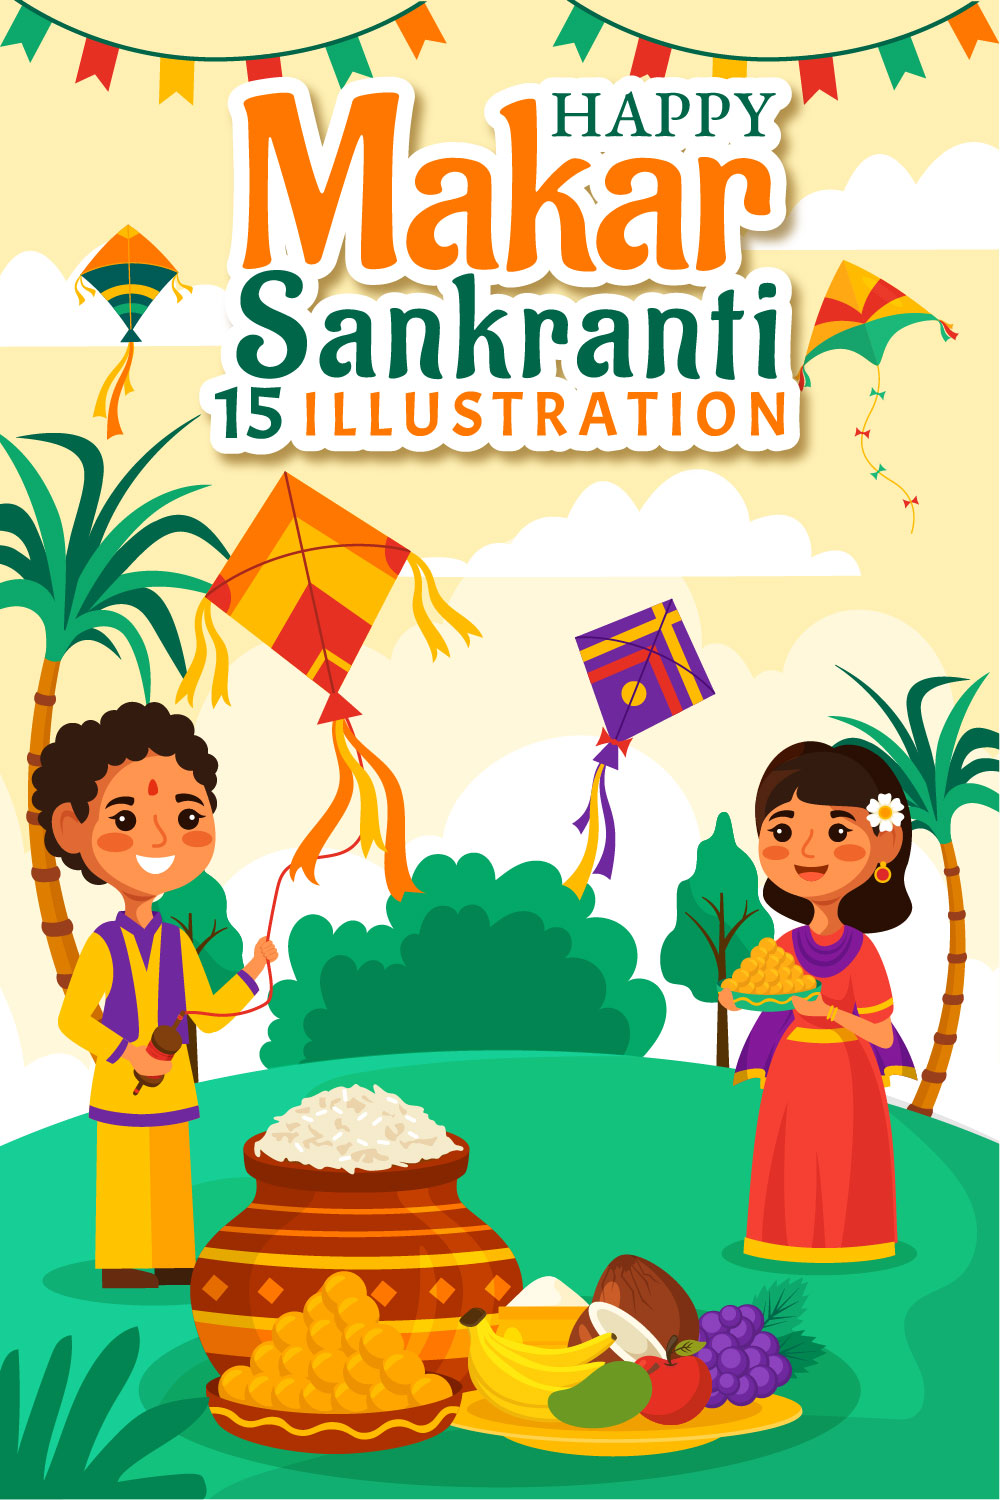 15 Makar Sankranti Illustration pinterest preview image.